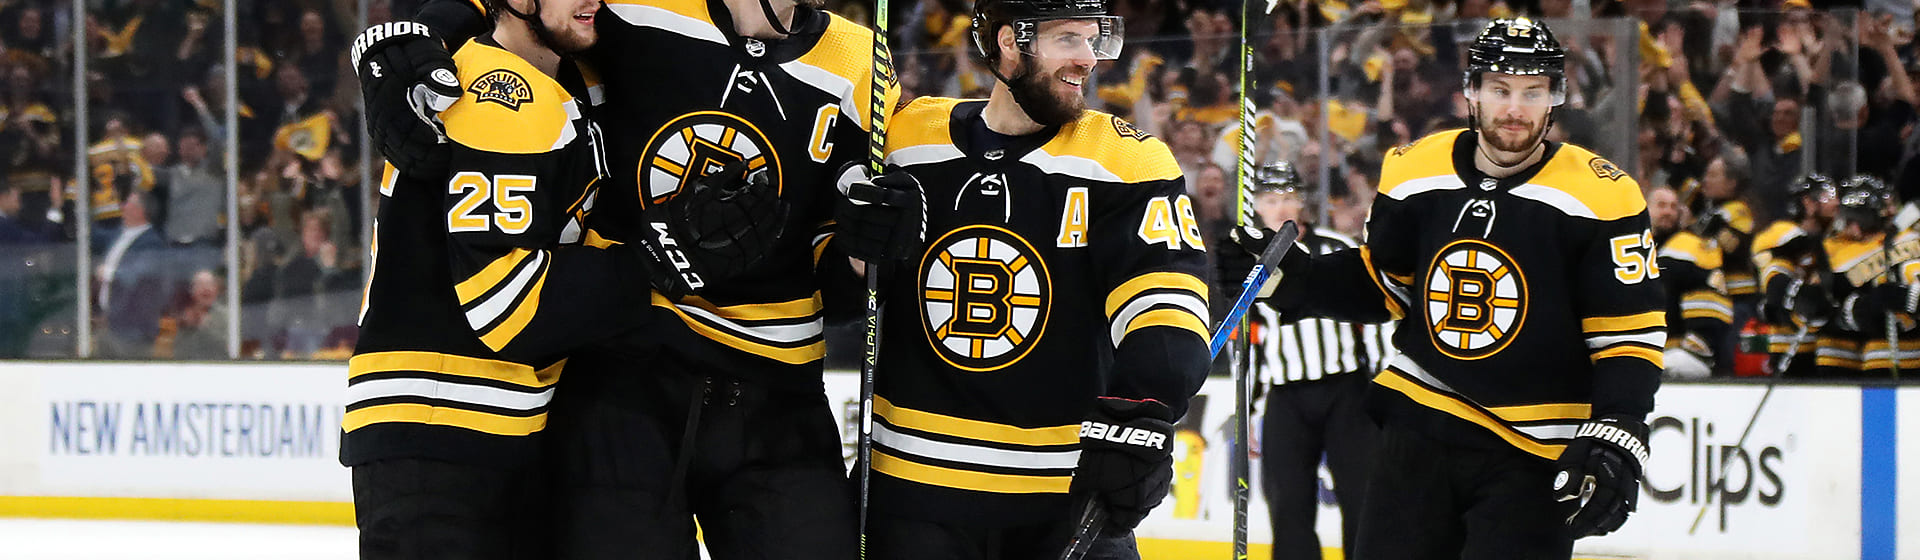 Boston Bruins - Мерч и одежда с атрибутикой